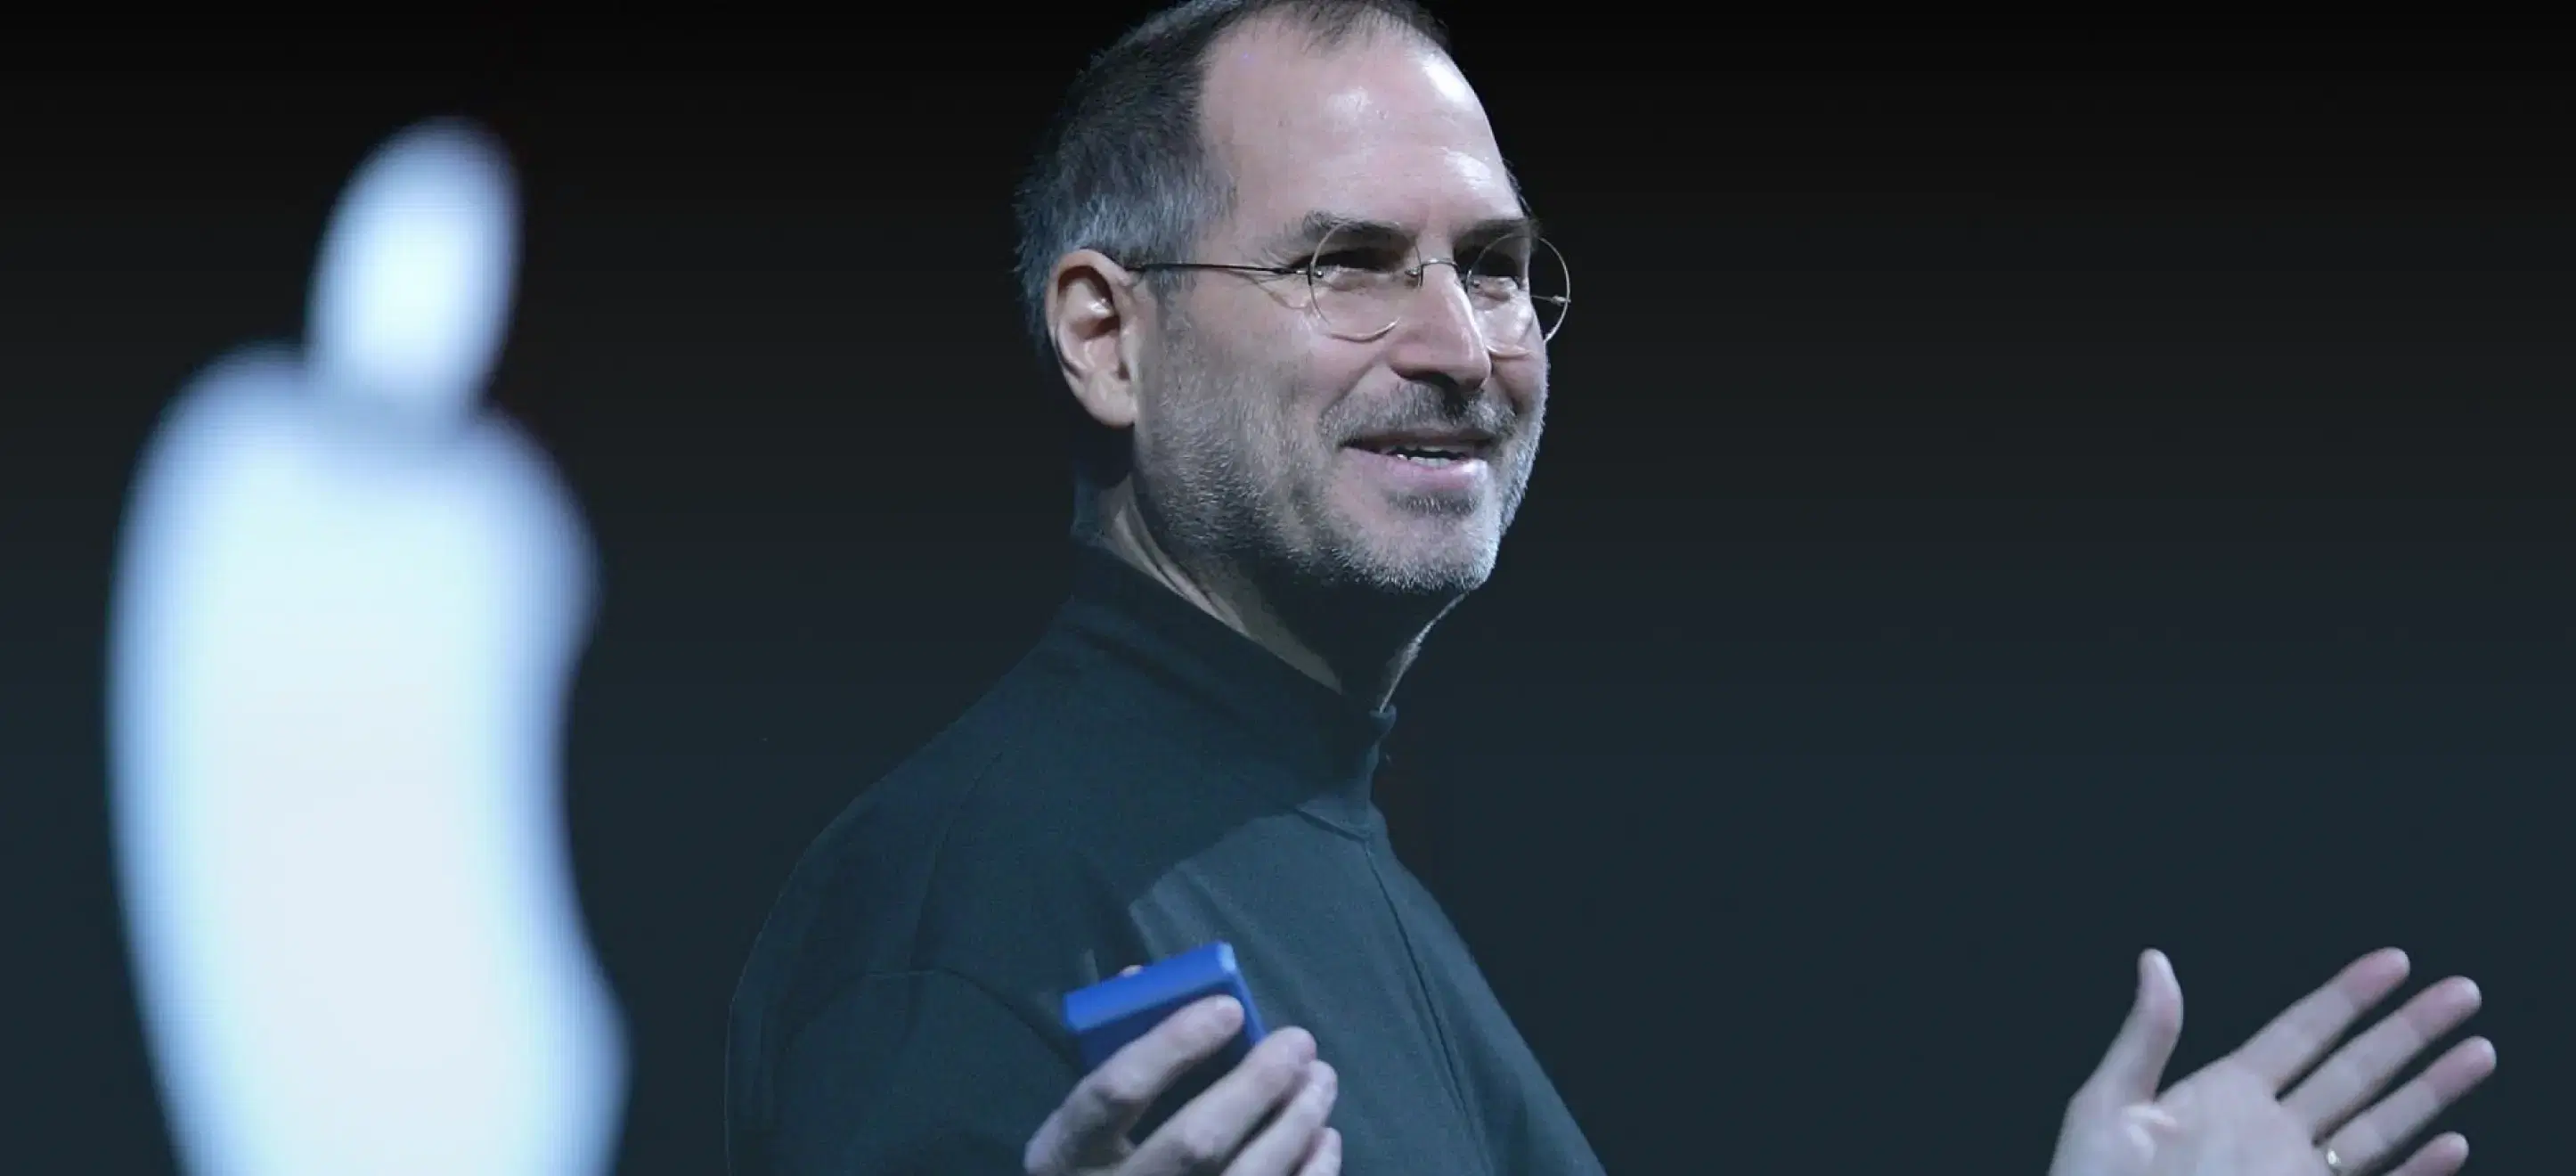 Oscar - Character interaction features Steve Jobs